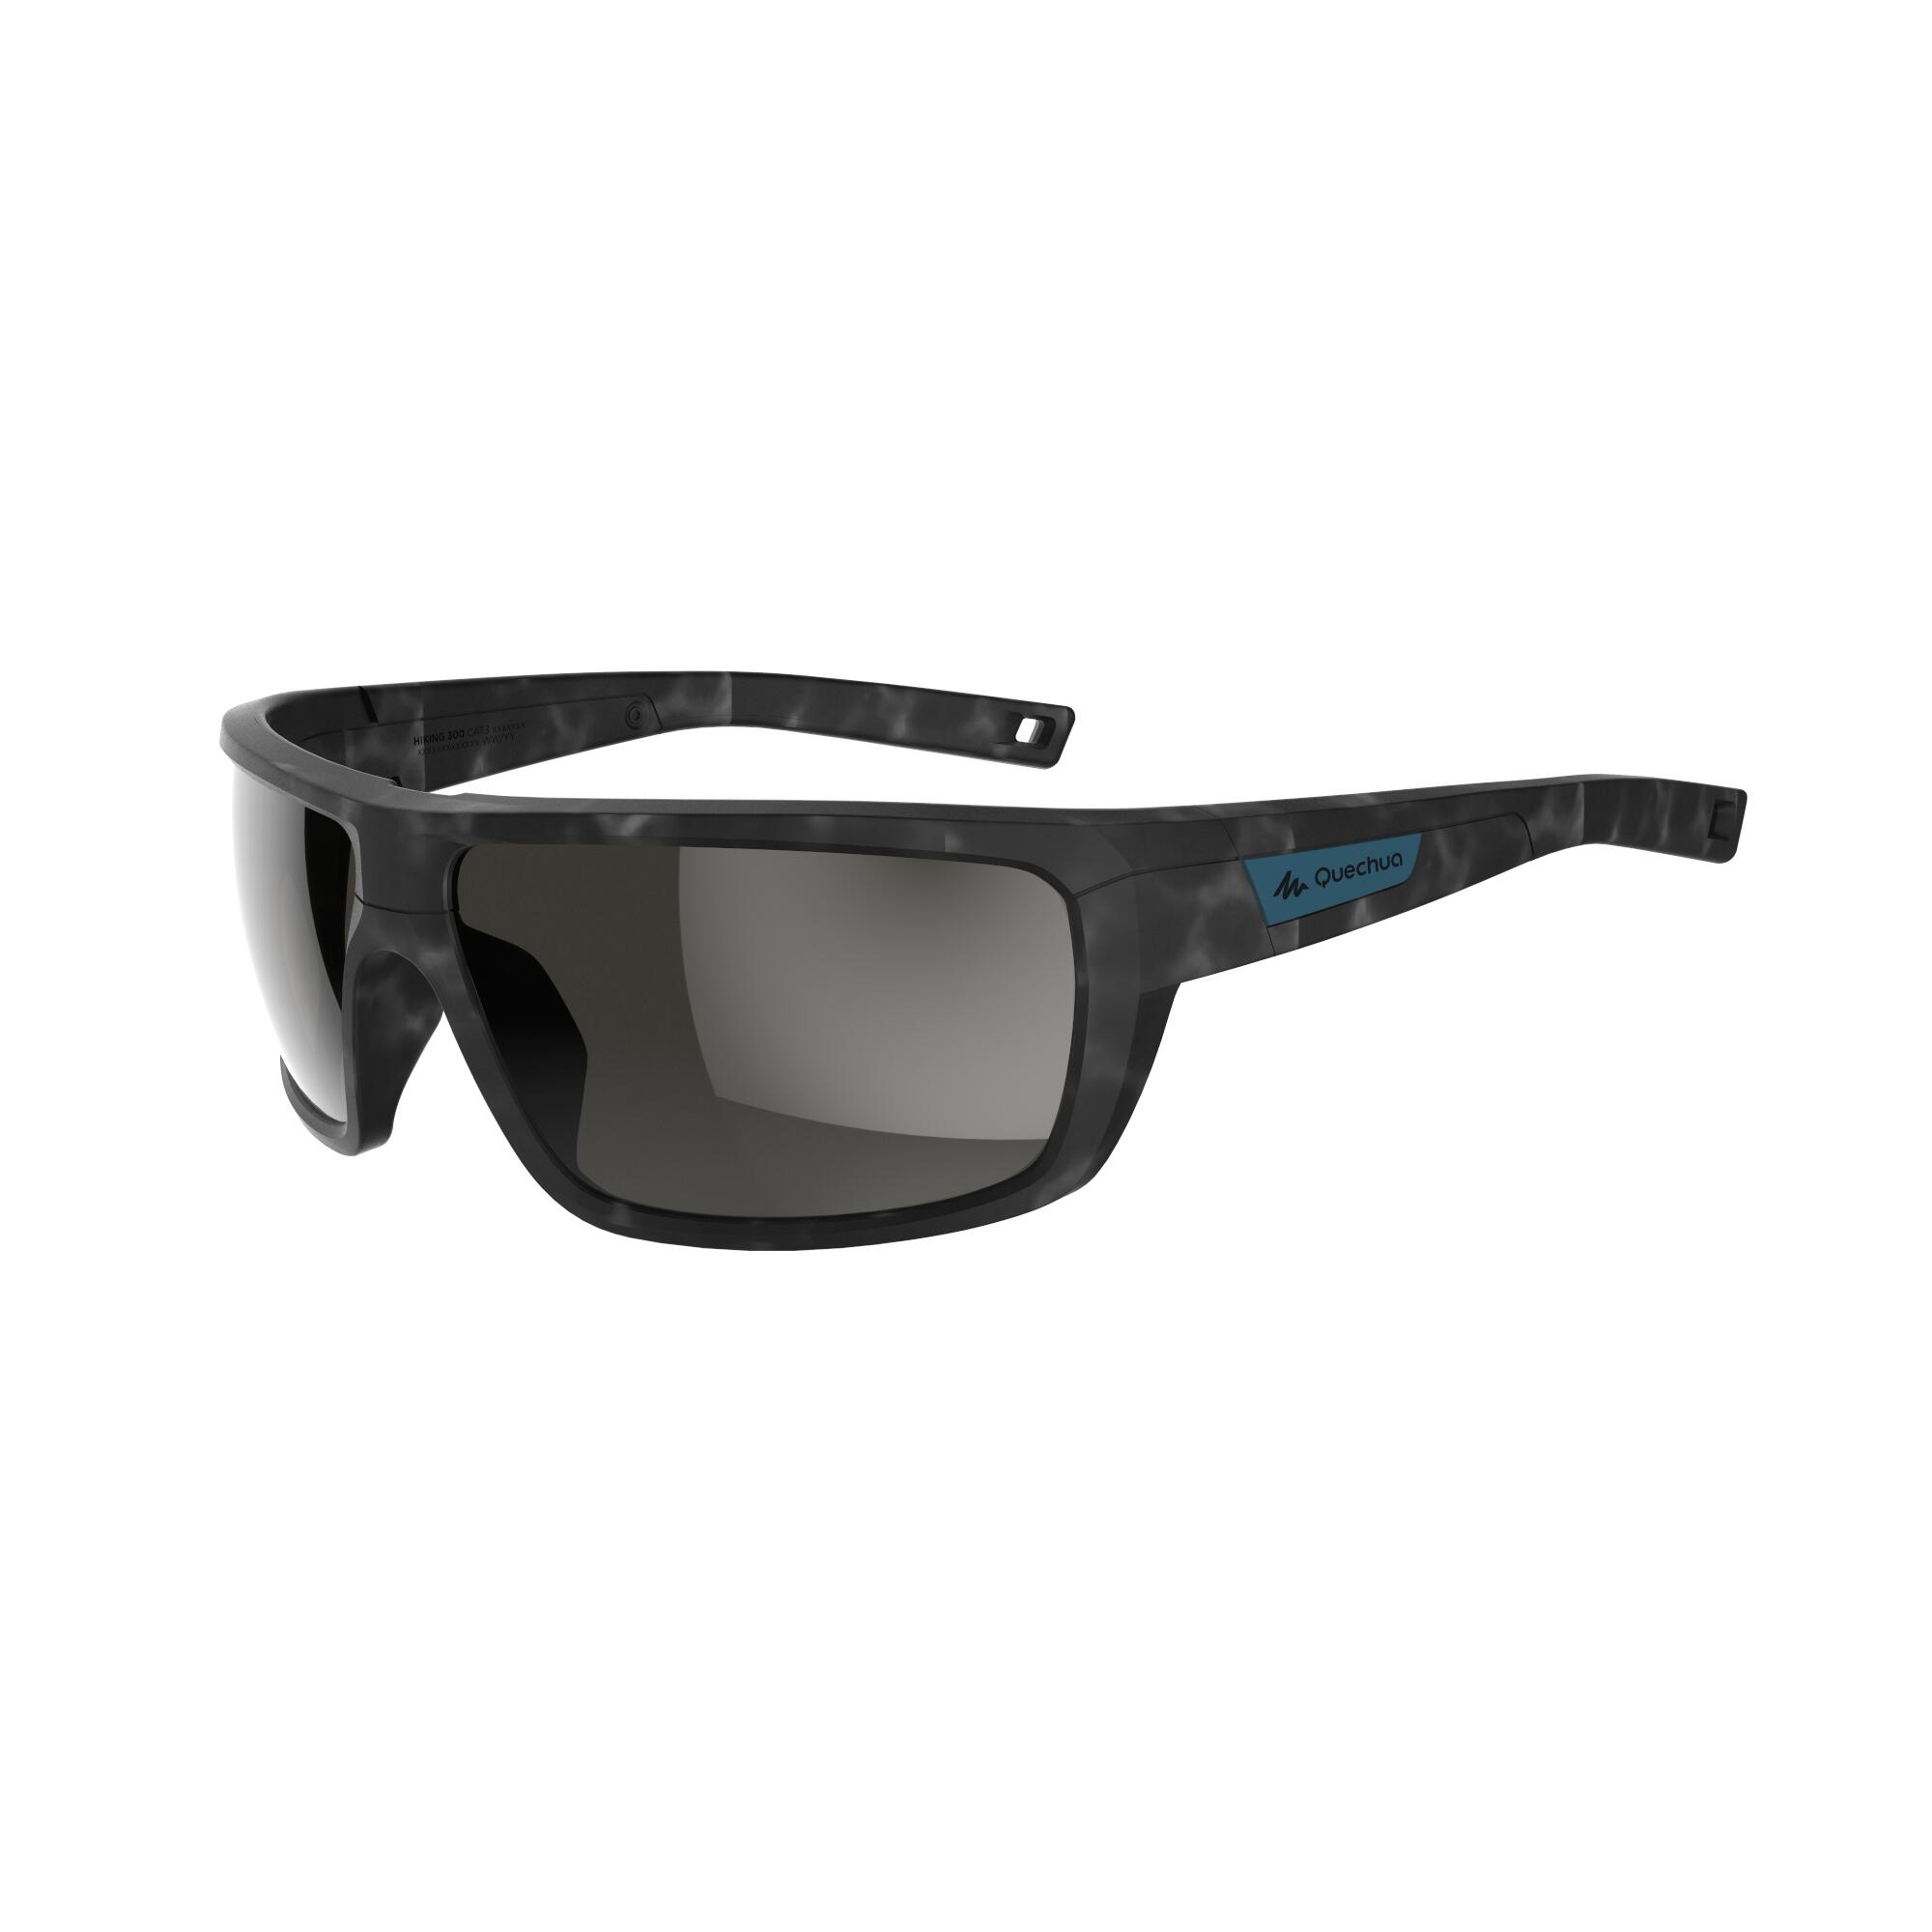 ST 100 MTB Sunglasses Category 3 - Grey | Decathlon UAE